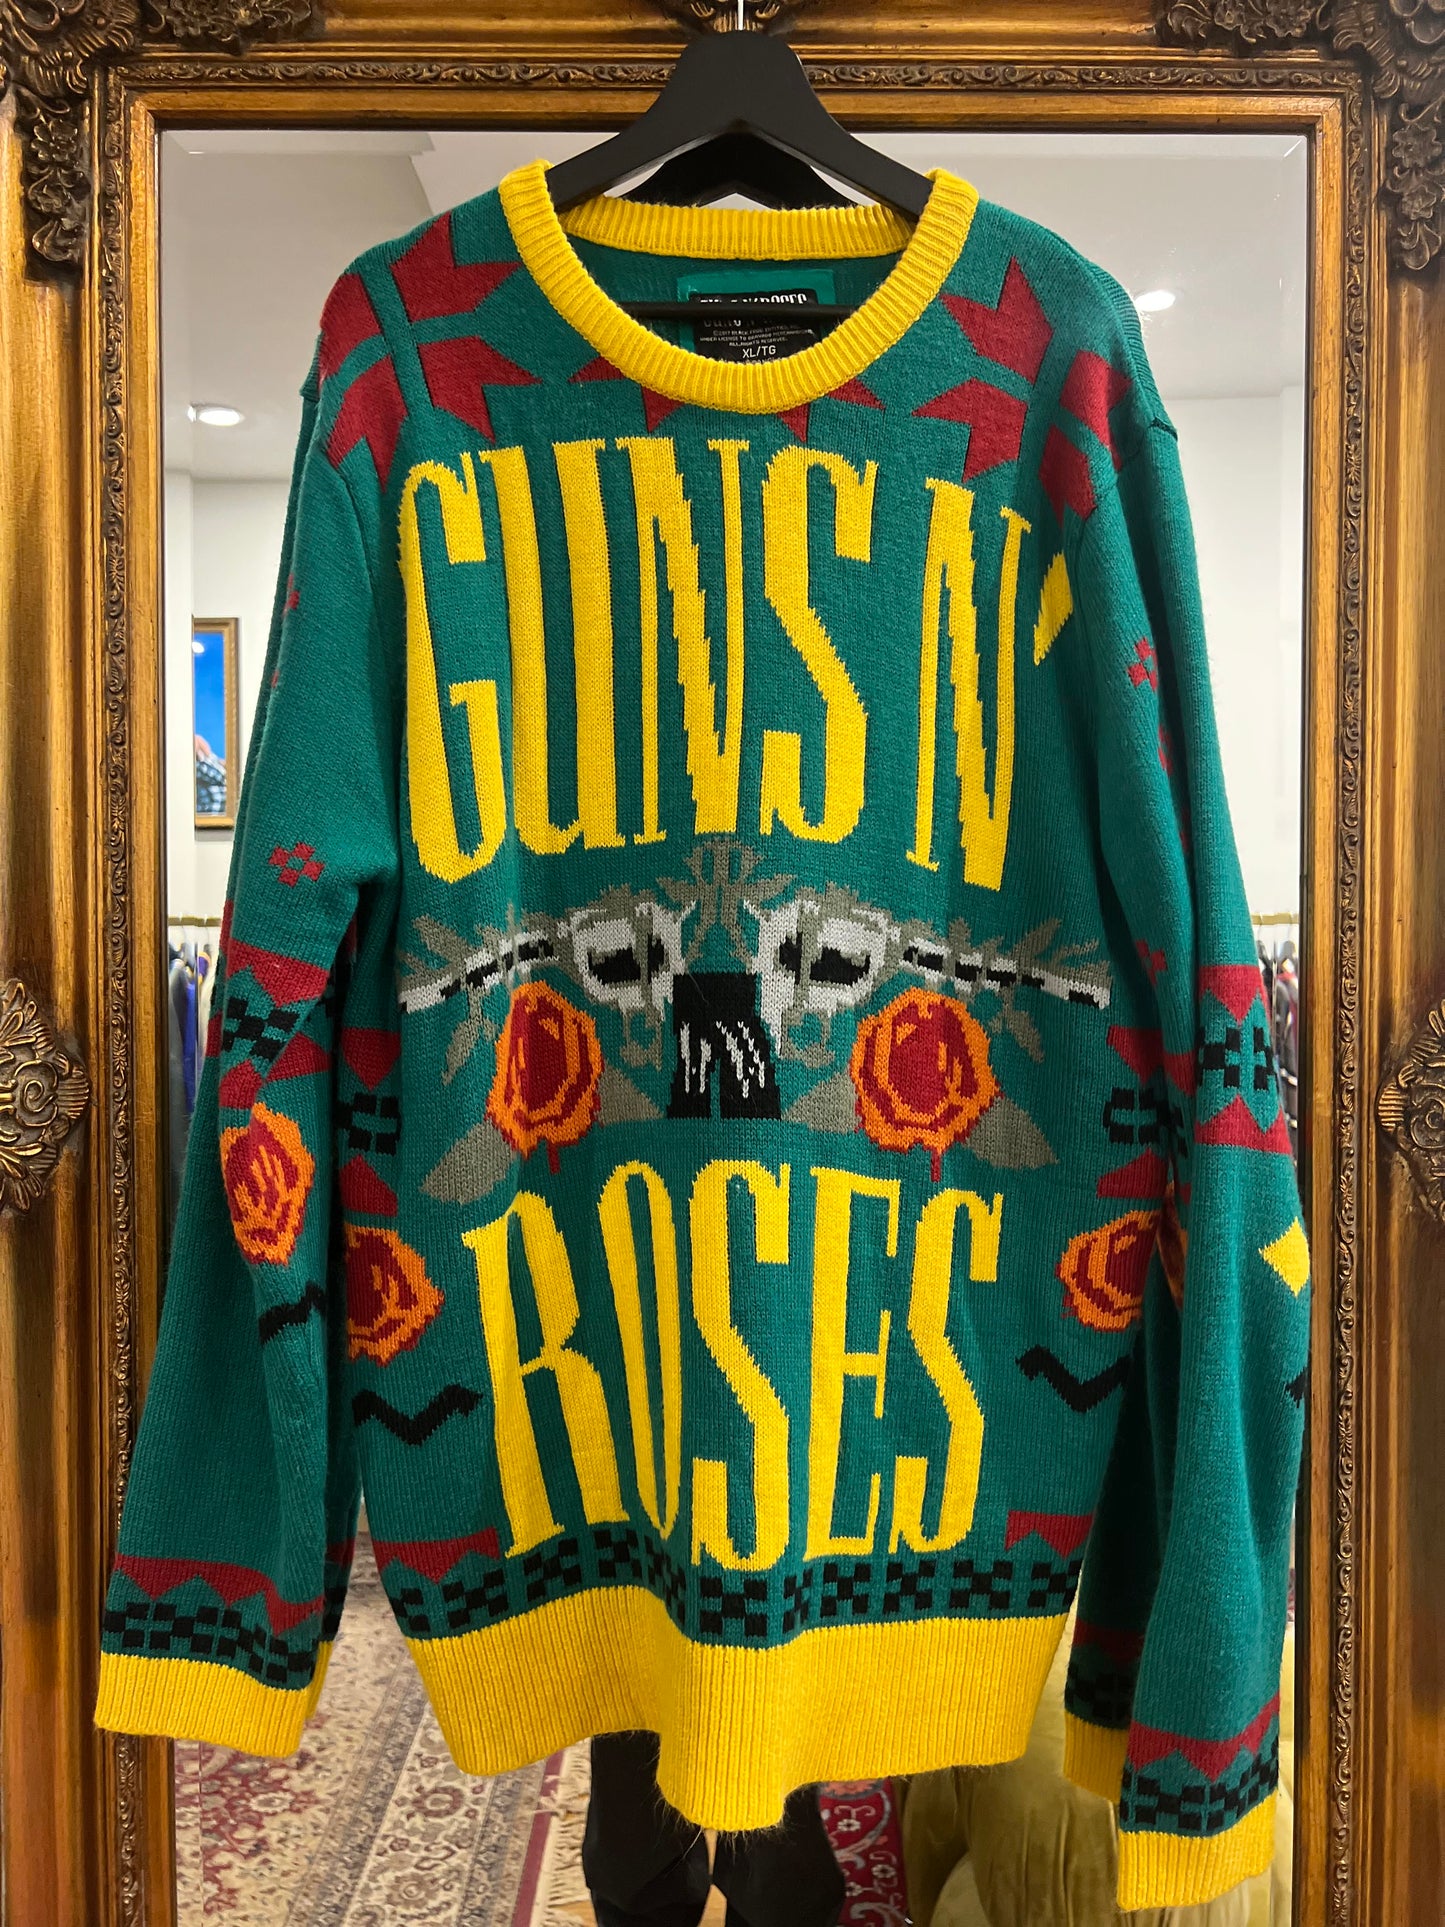 Vintage Guns N Roses Knit Sweater (XL)